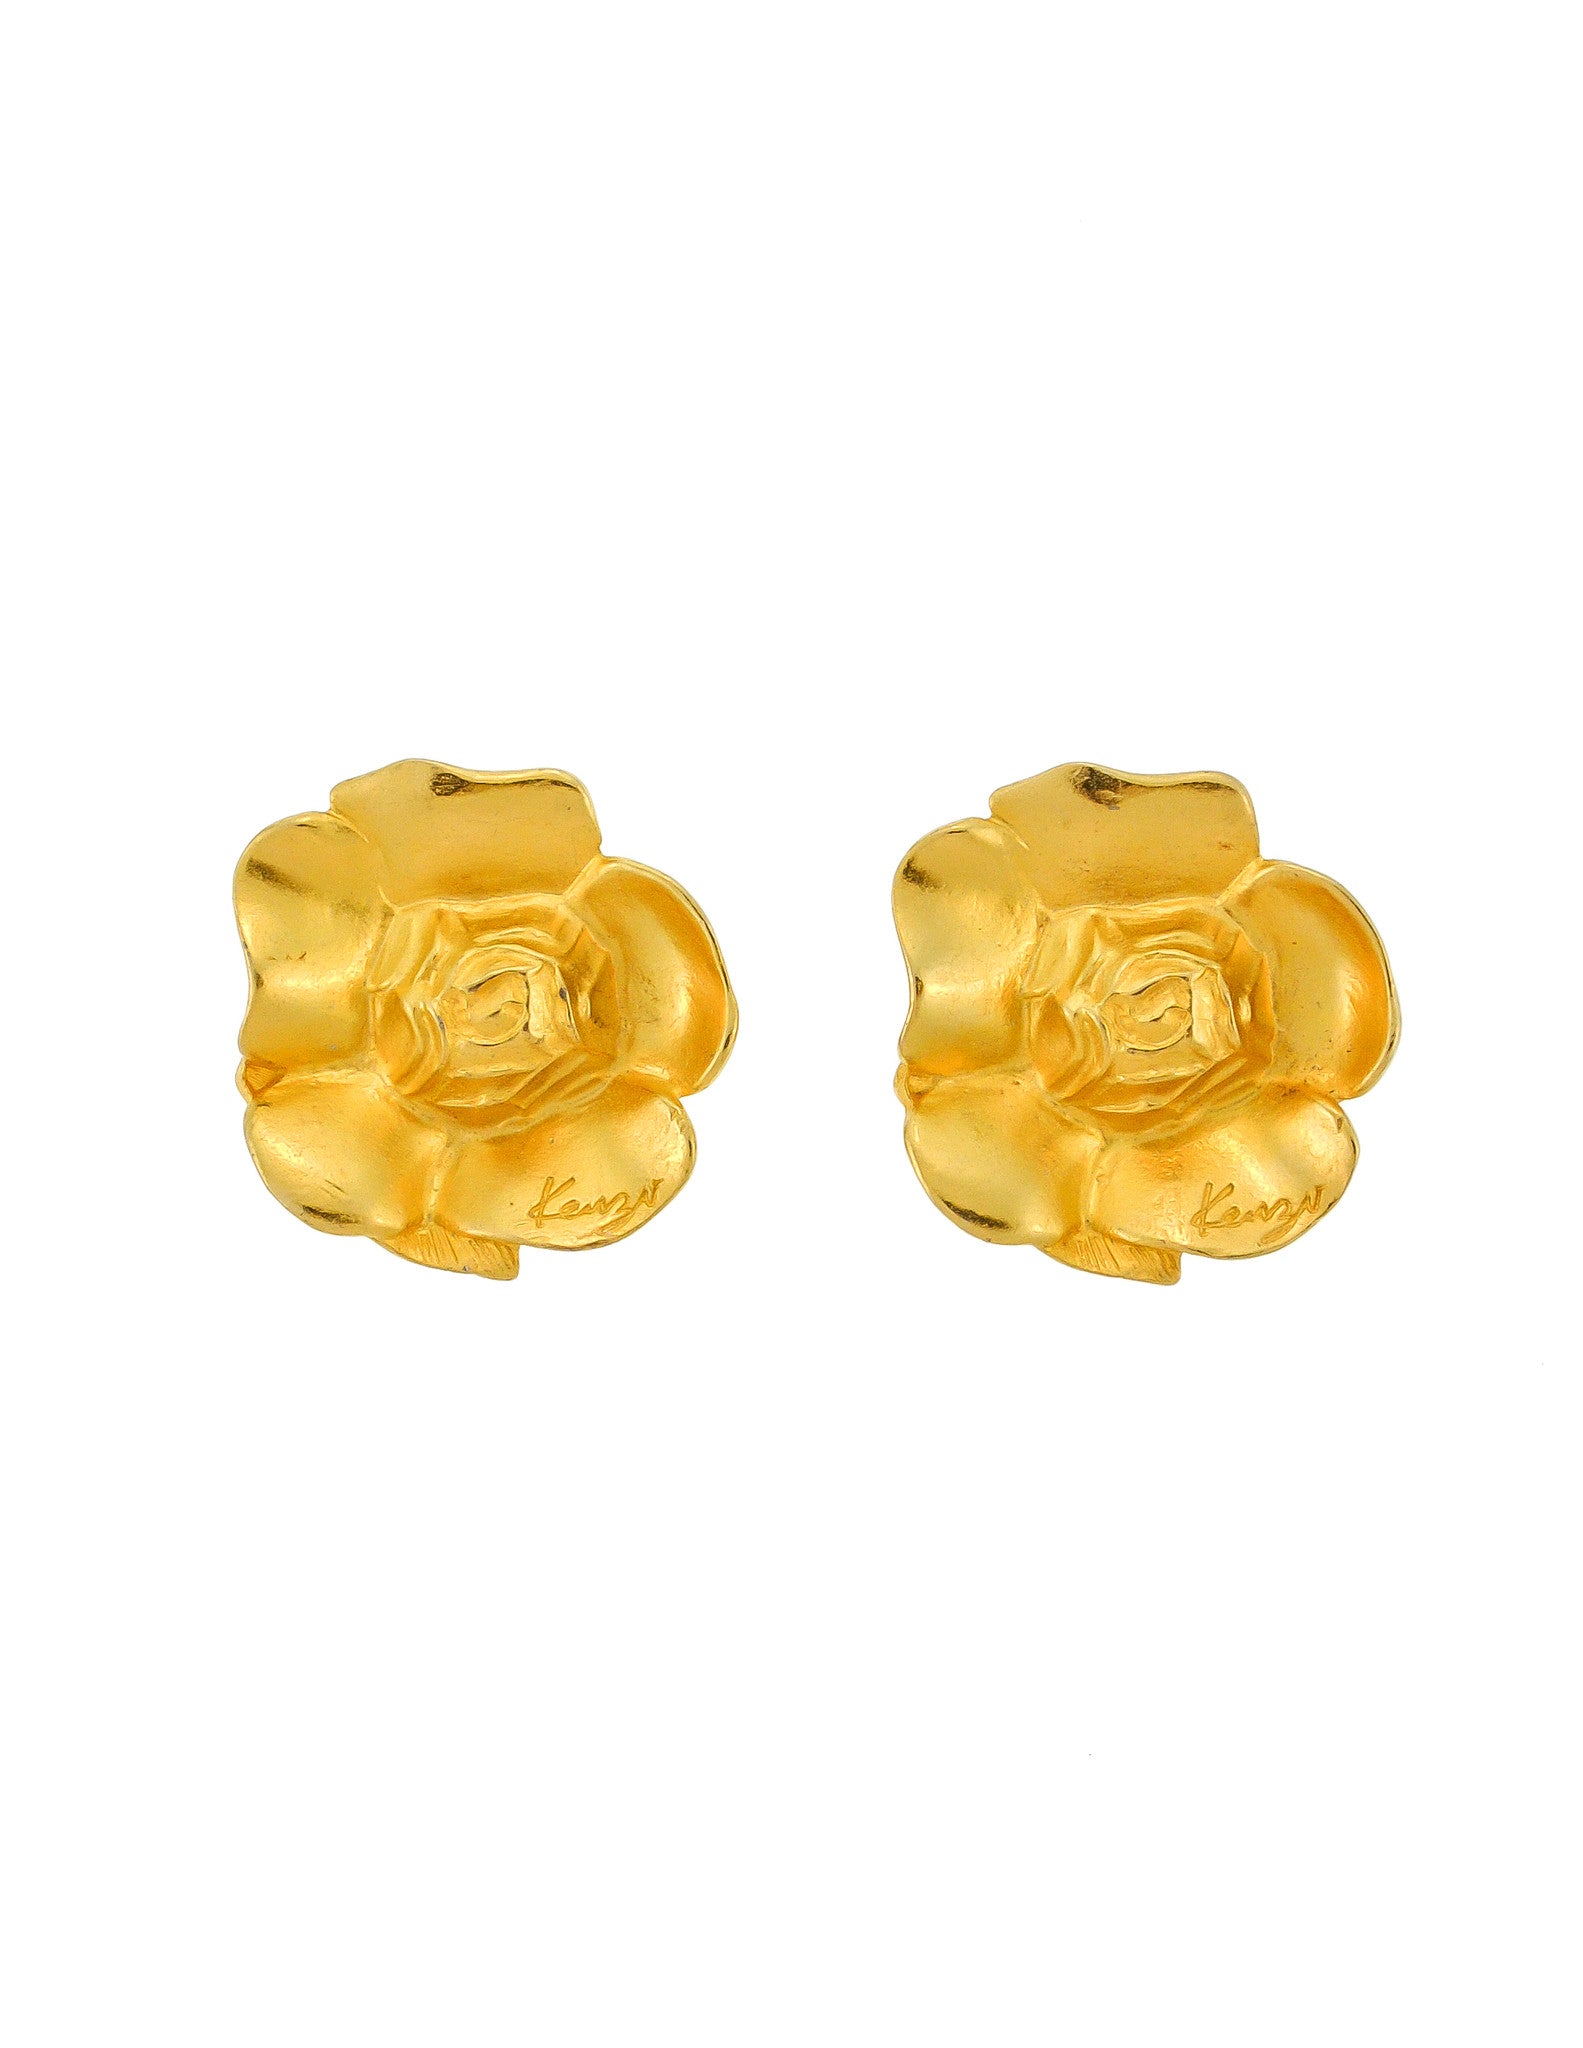 Kenzo Vintage Gold Flower Earrings - Amarcord Vintage Fashion
 - 1